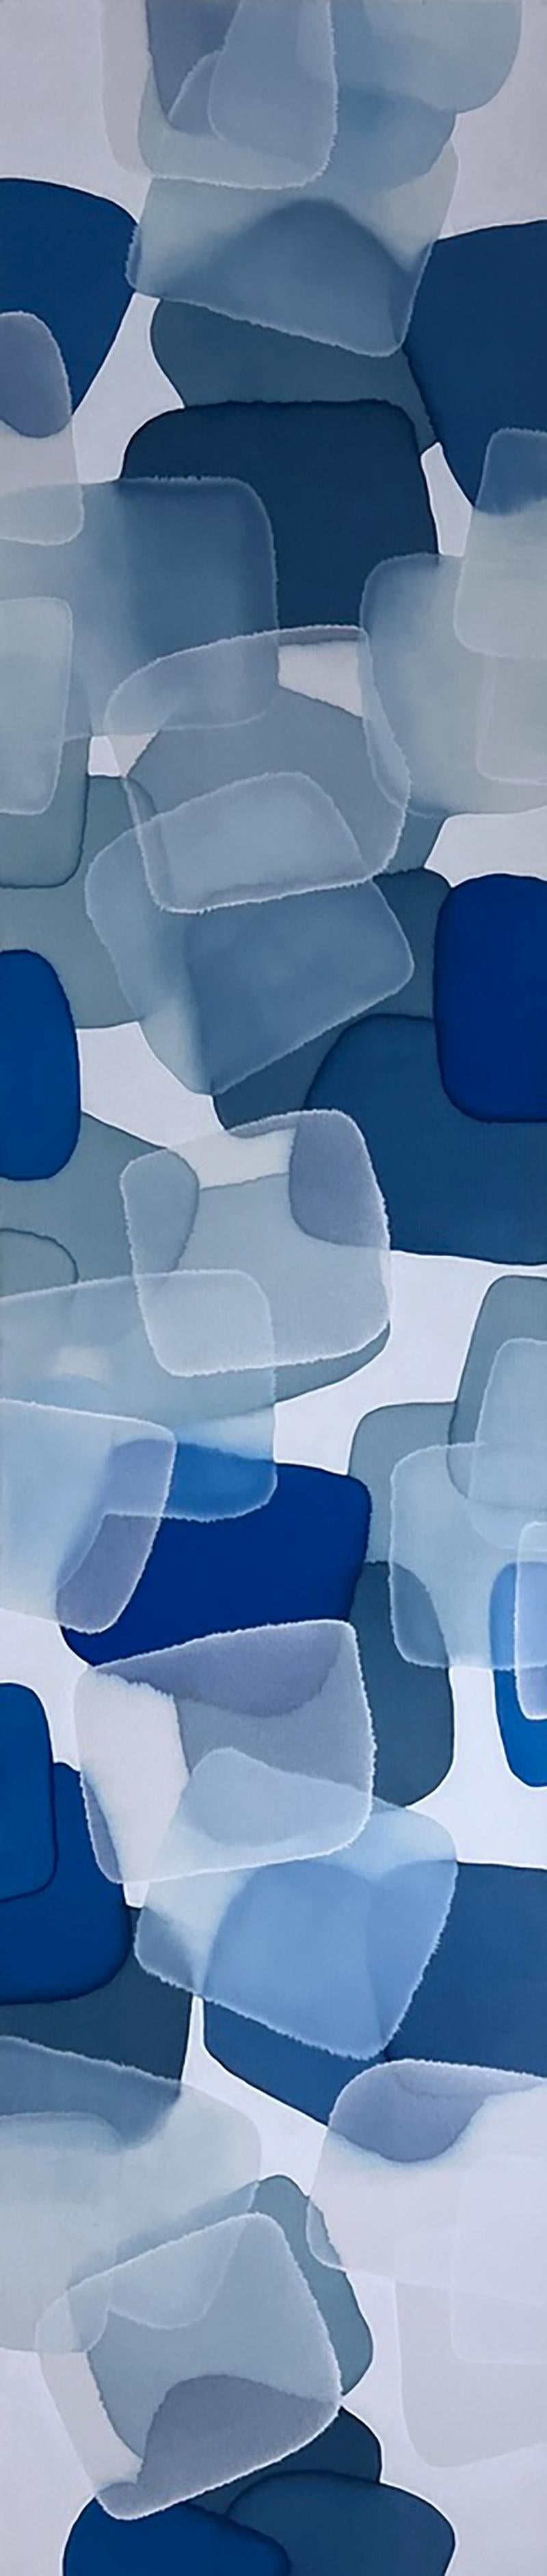 Abstract/Nature/Blue_The Deep Blue Dream_Horizontal/Vertical_Charlie Bluett 1